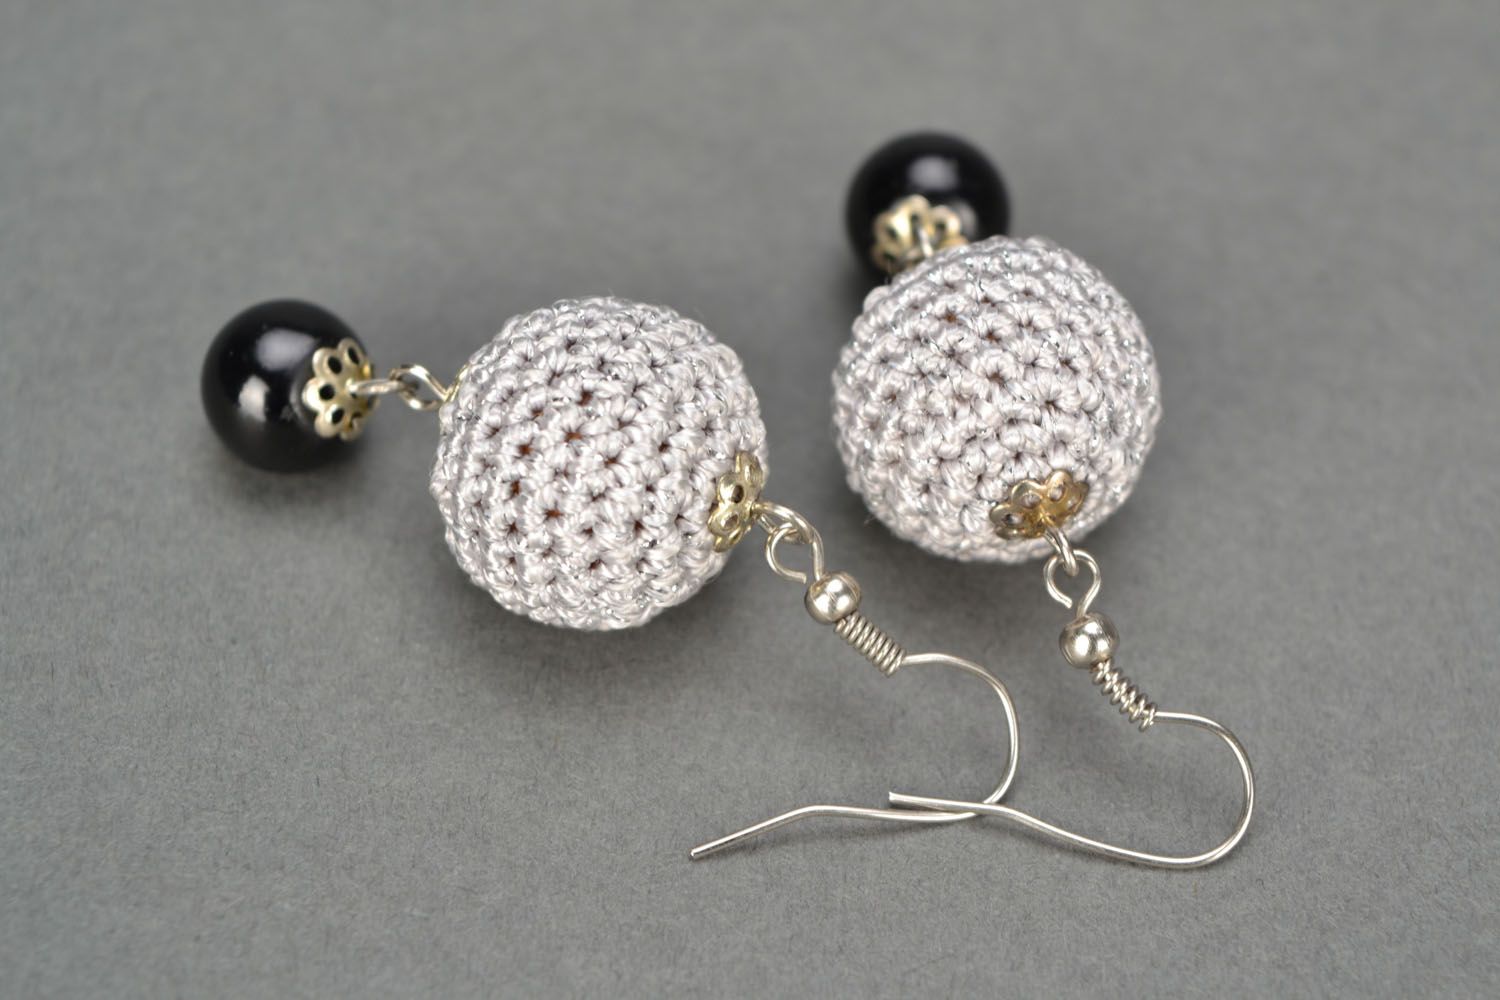 Black and white crochet earrings photo 4